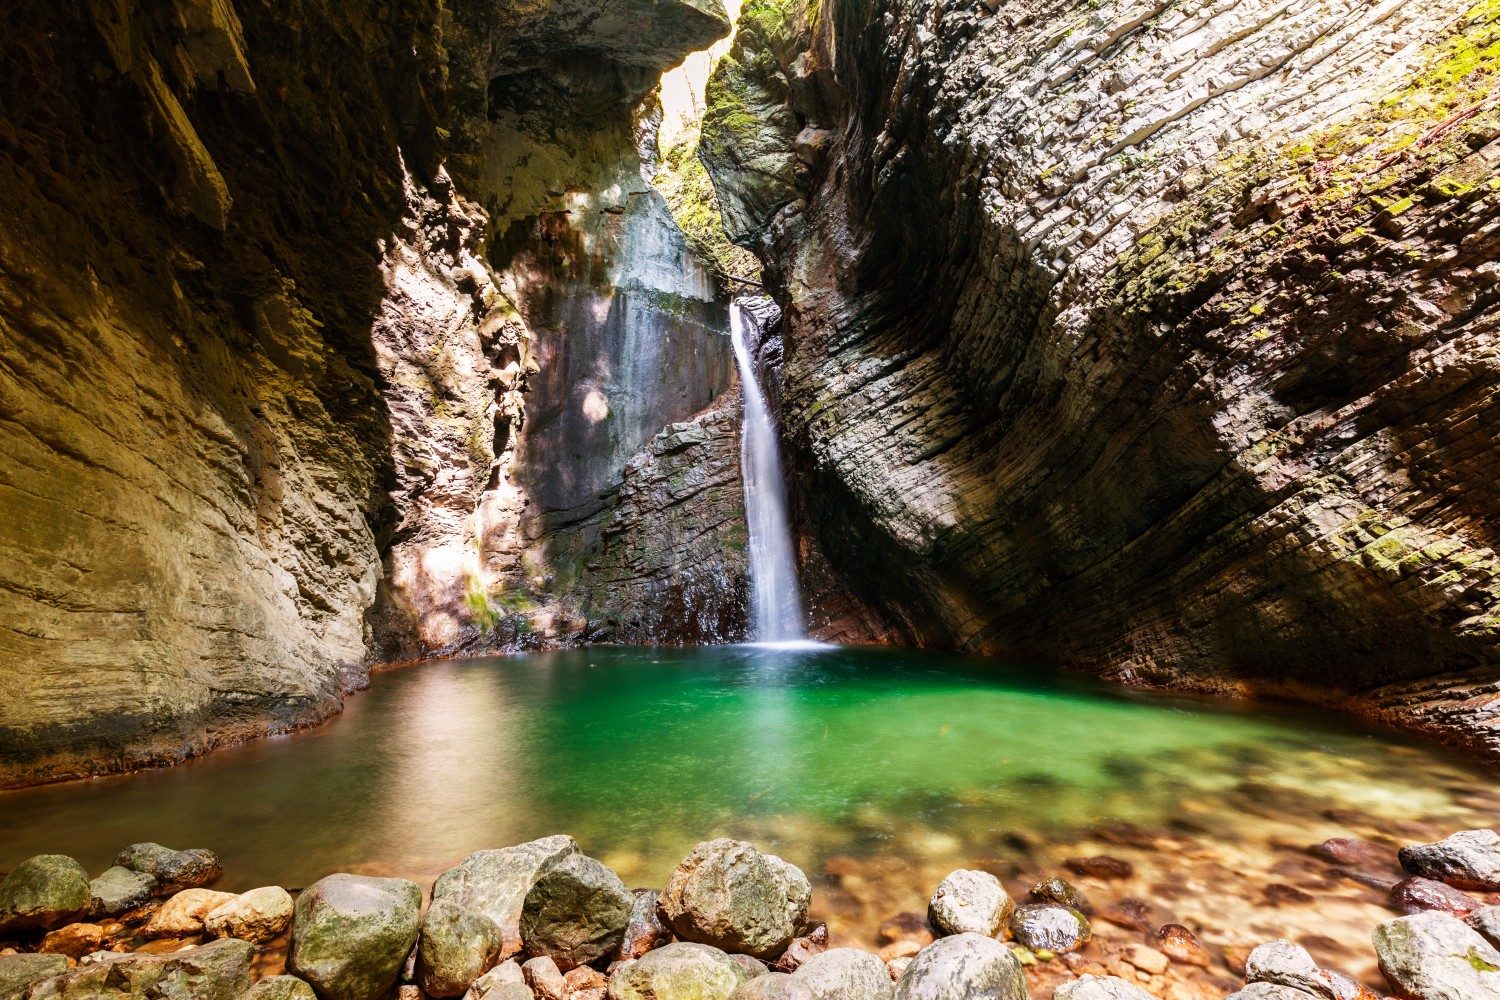 Beautiful Kozjak waterfall,Slovenia - one of the reasons to go hiking in Slovenia